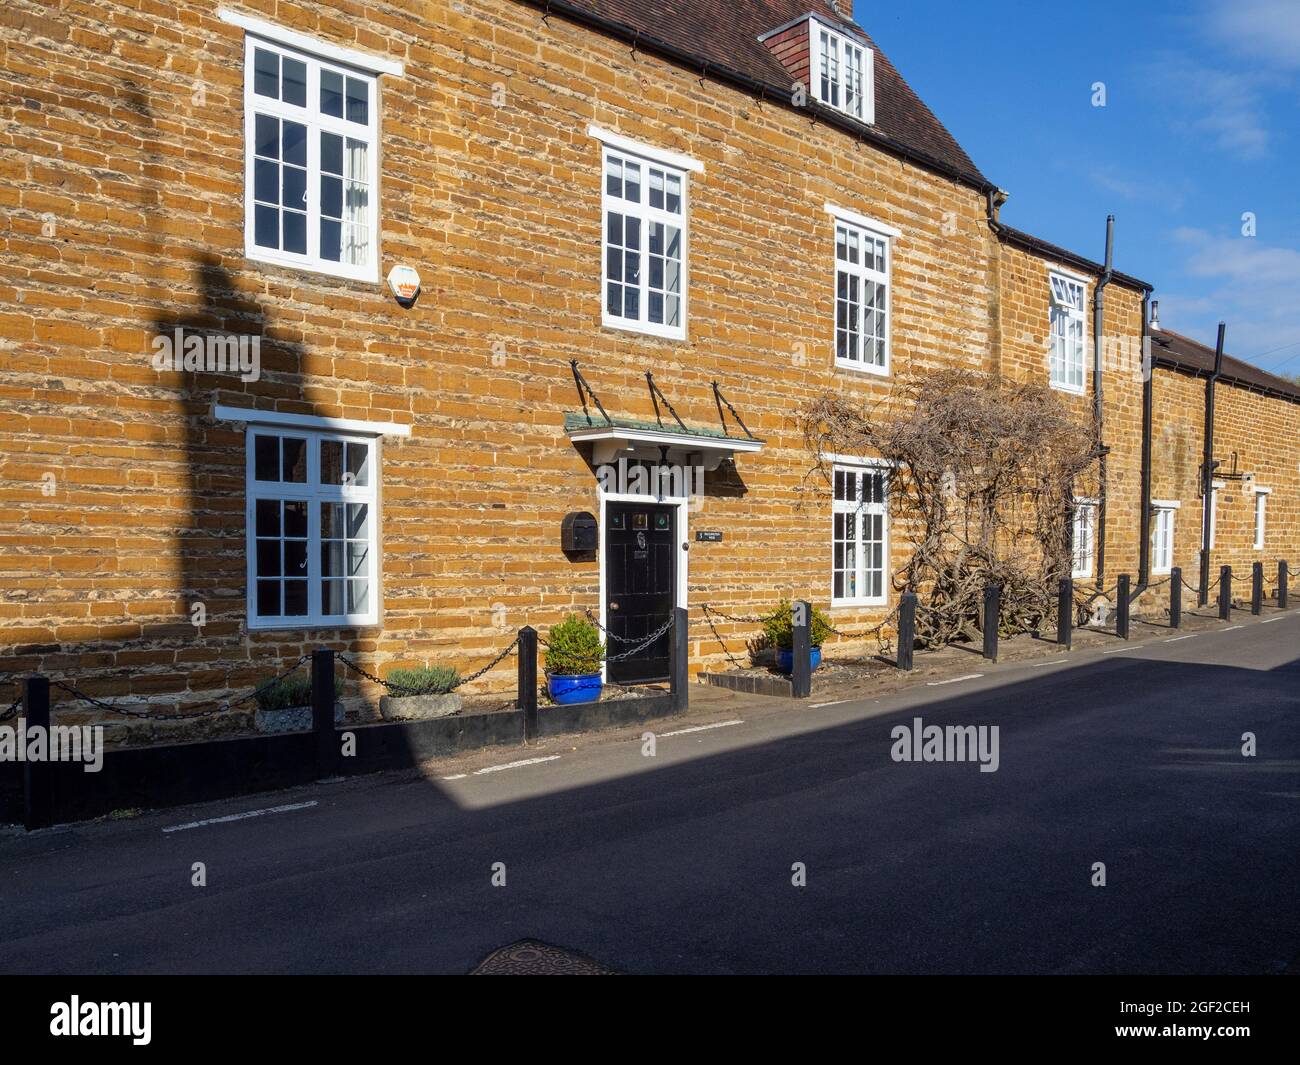 Street view in Spring in the pretty village of Dallington, Northampton, UK Stock Photo